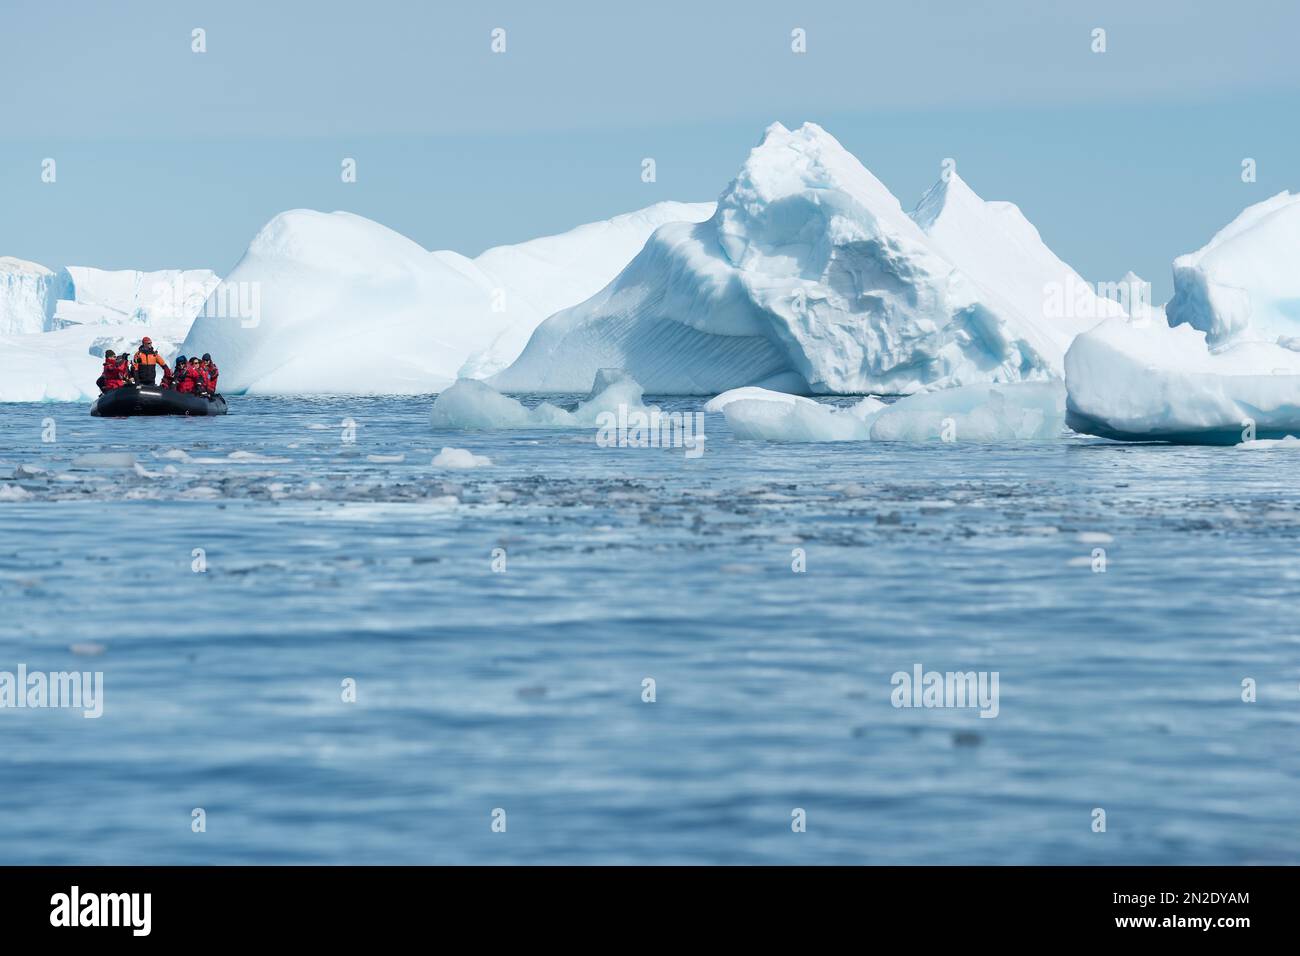 Zodiac trip around icebergs, Antarctica Stock Photo